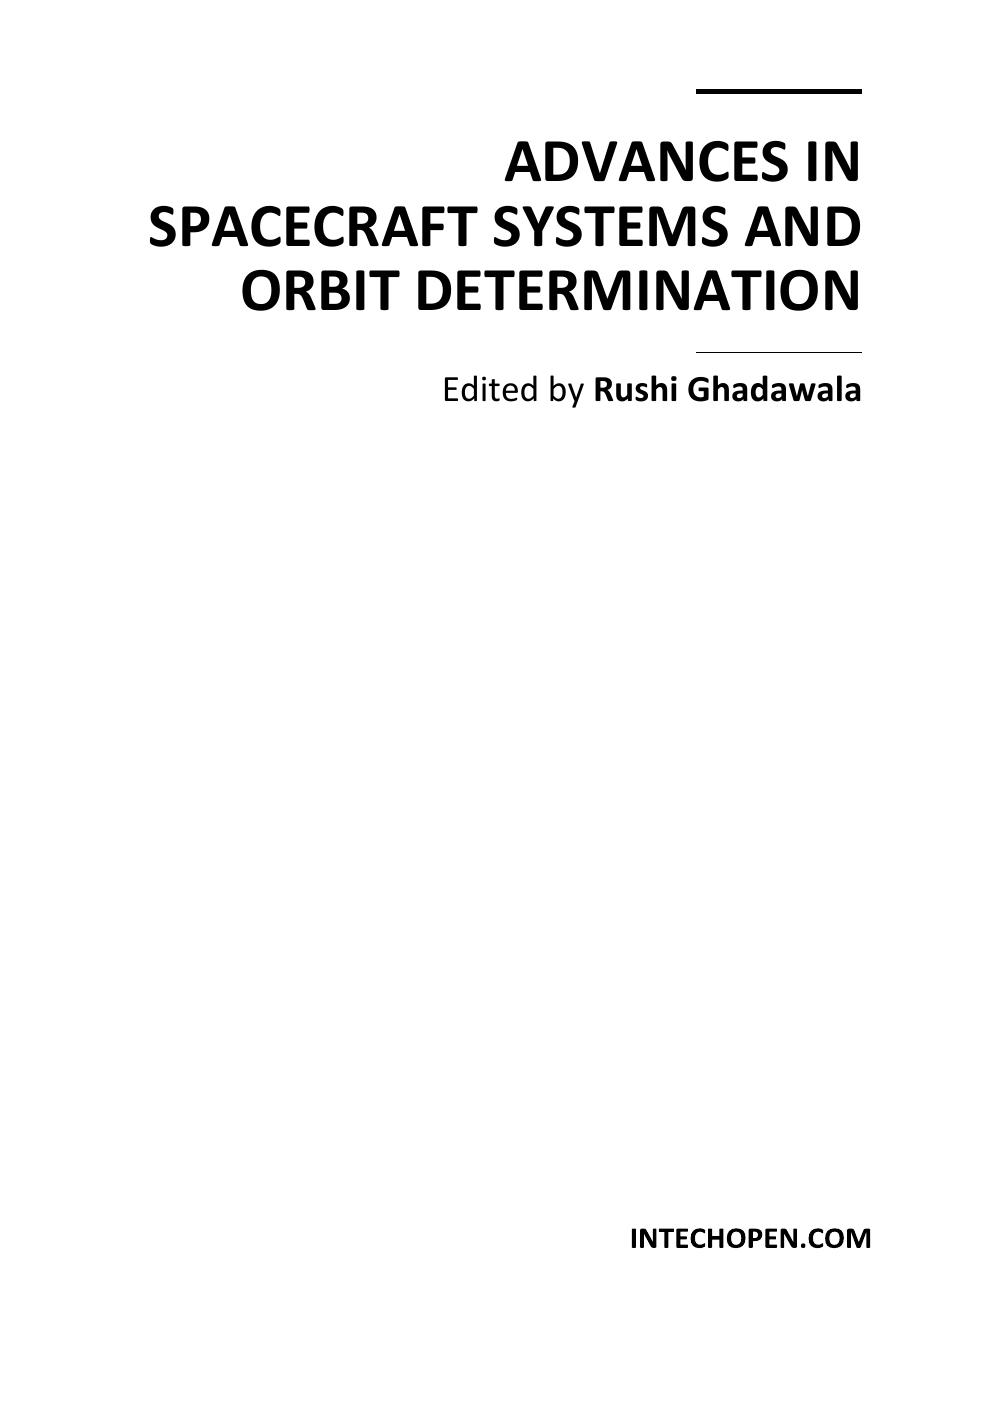 Advances in Spacecraft Systems and Orbit Determination 2012.pdf